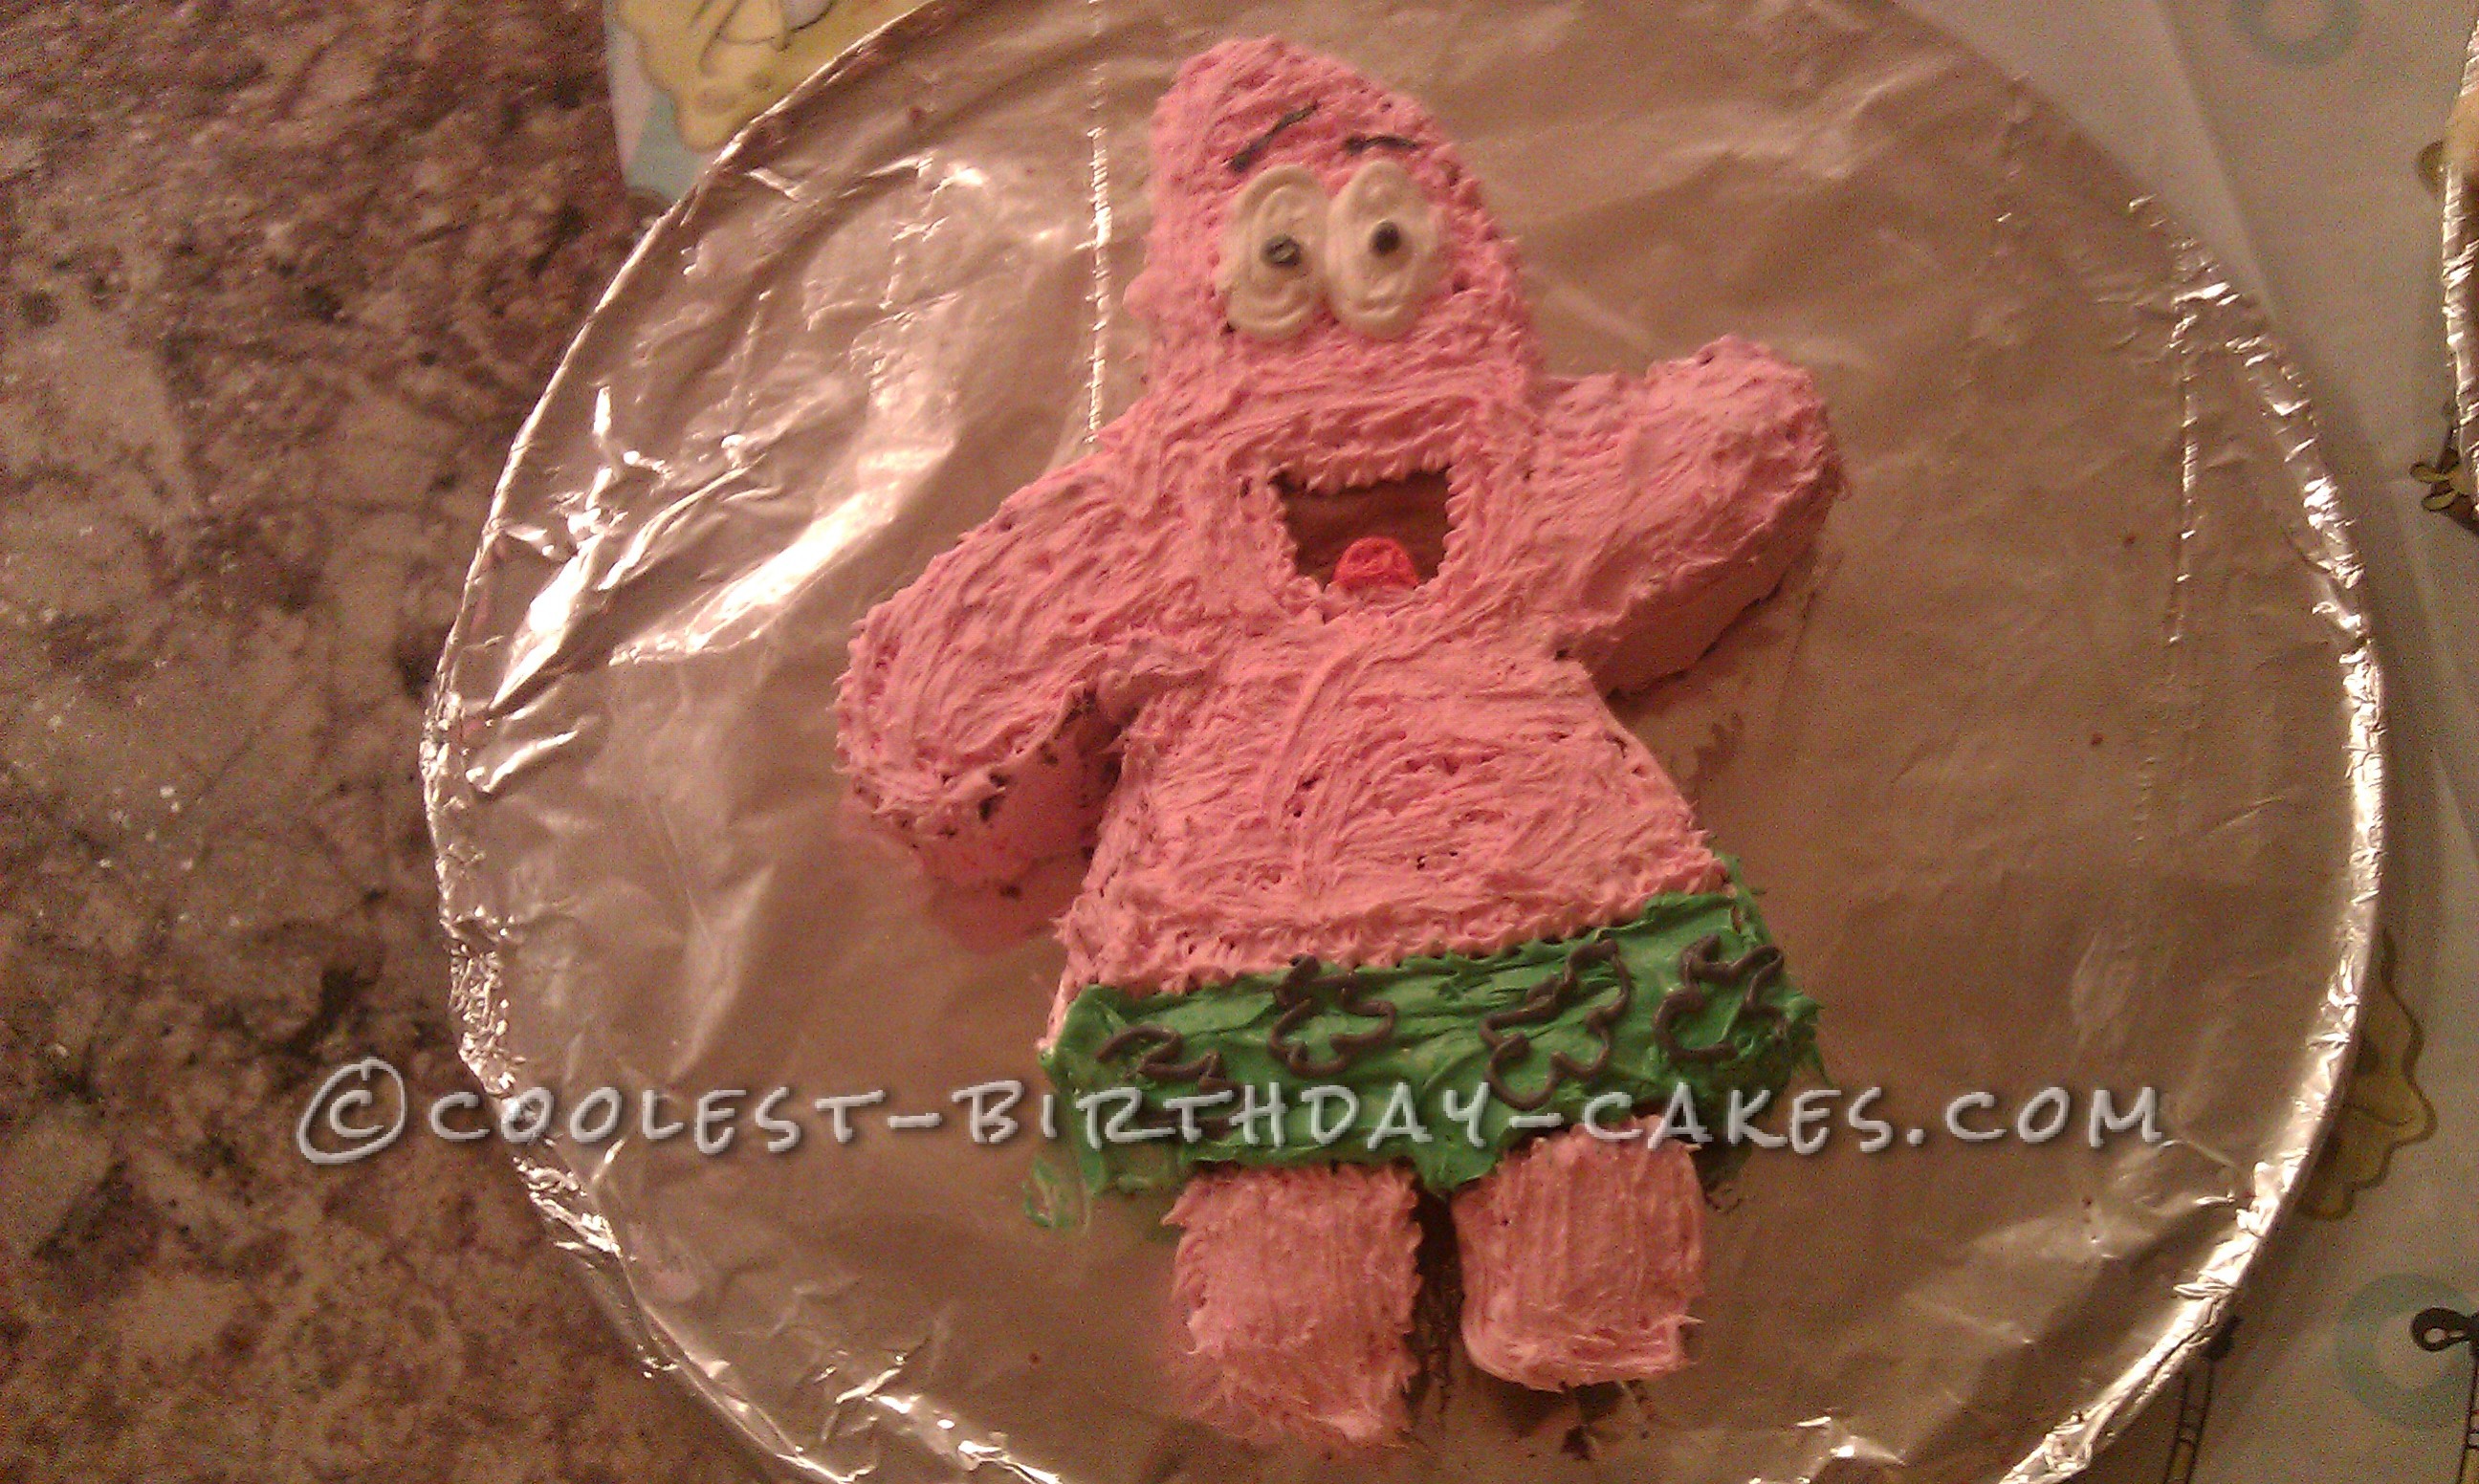 Coolest Sponge Bob and Patrick Birthday Cake